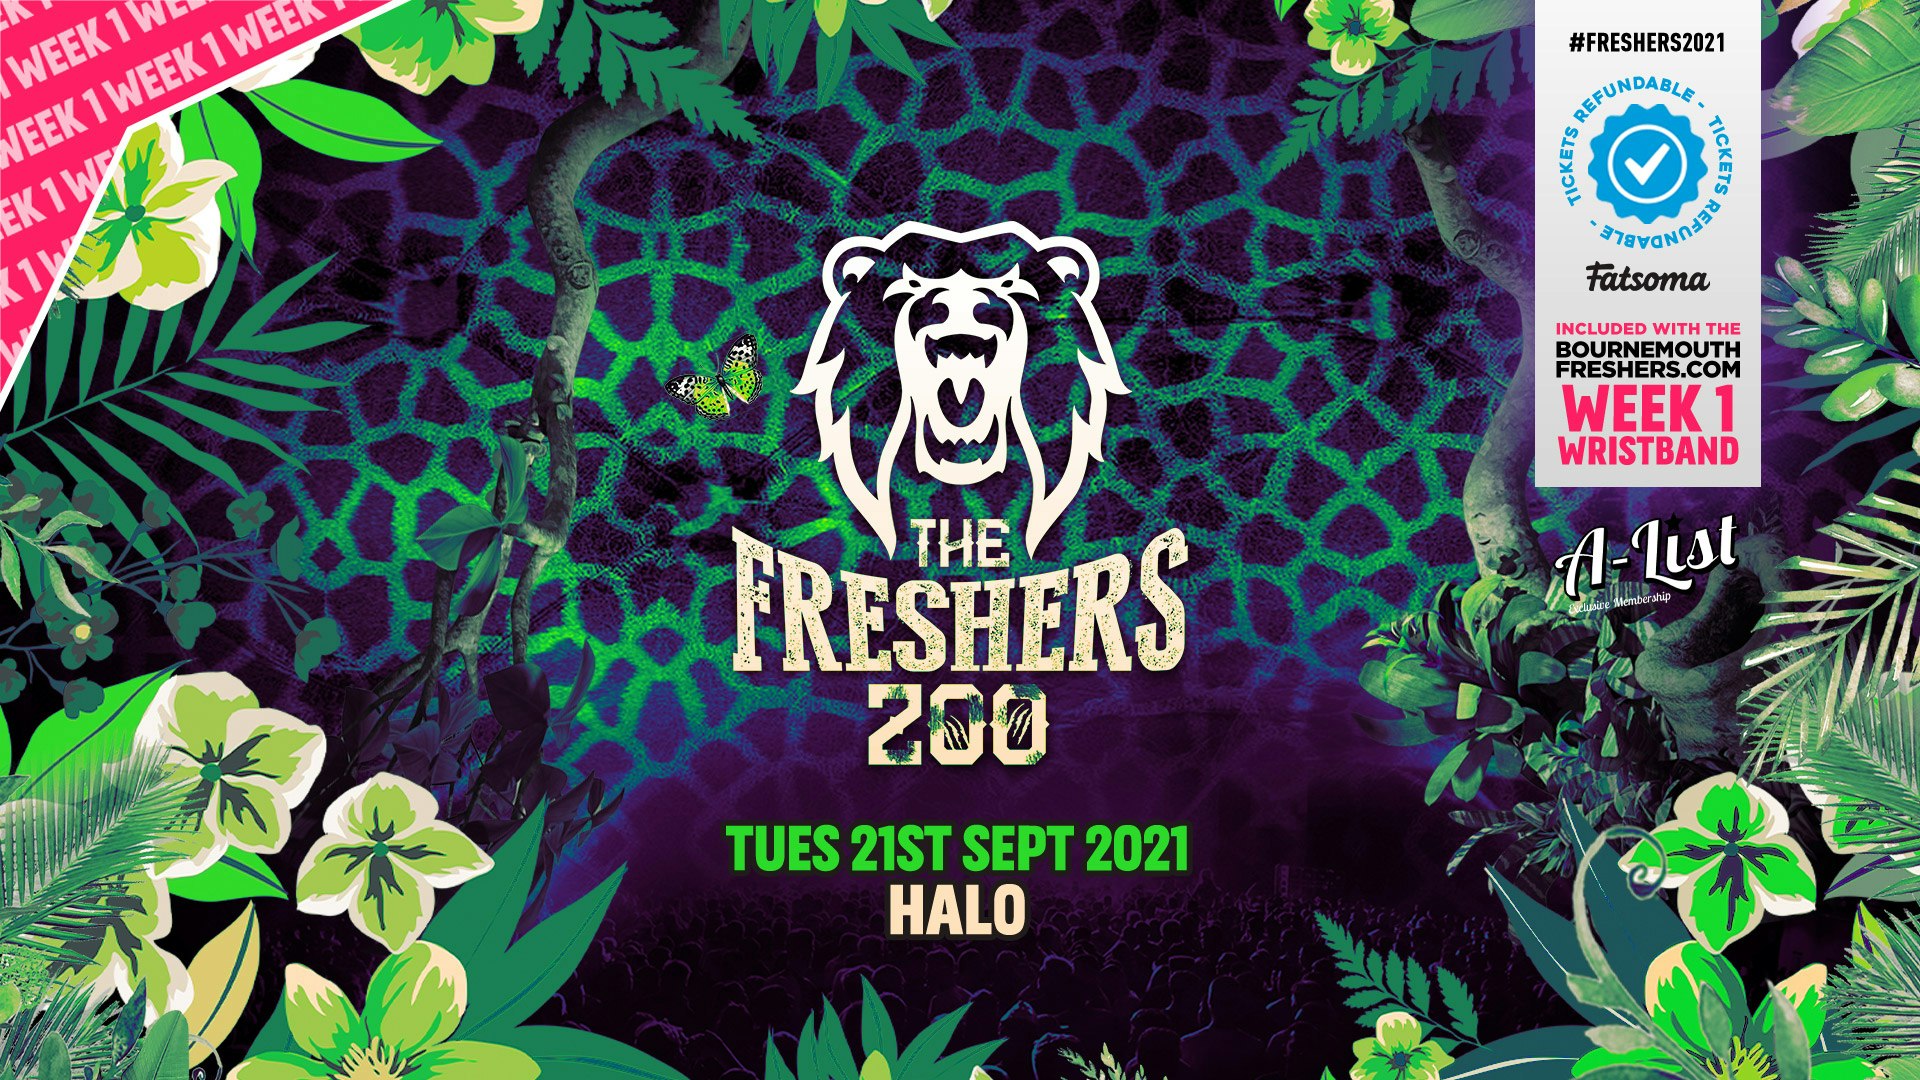 [TONIGHT] The Freshers Zoo @ Halo – FINAL 100 £5 TICKETS  | Bournemouth Freshers 2021 [Week 1 Freshers Event]